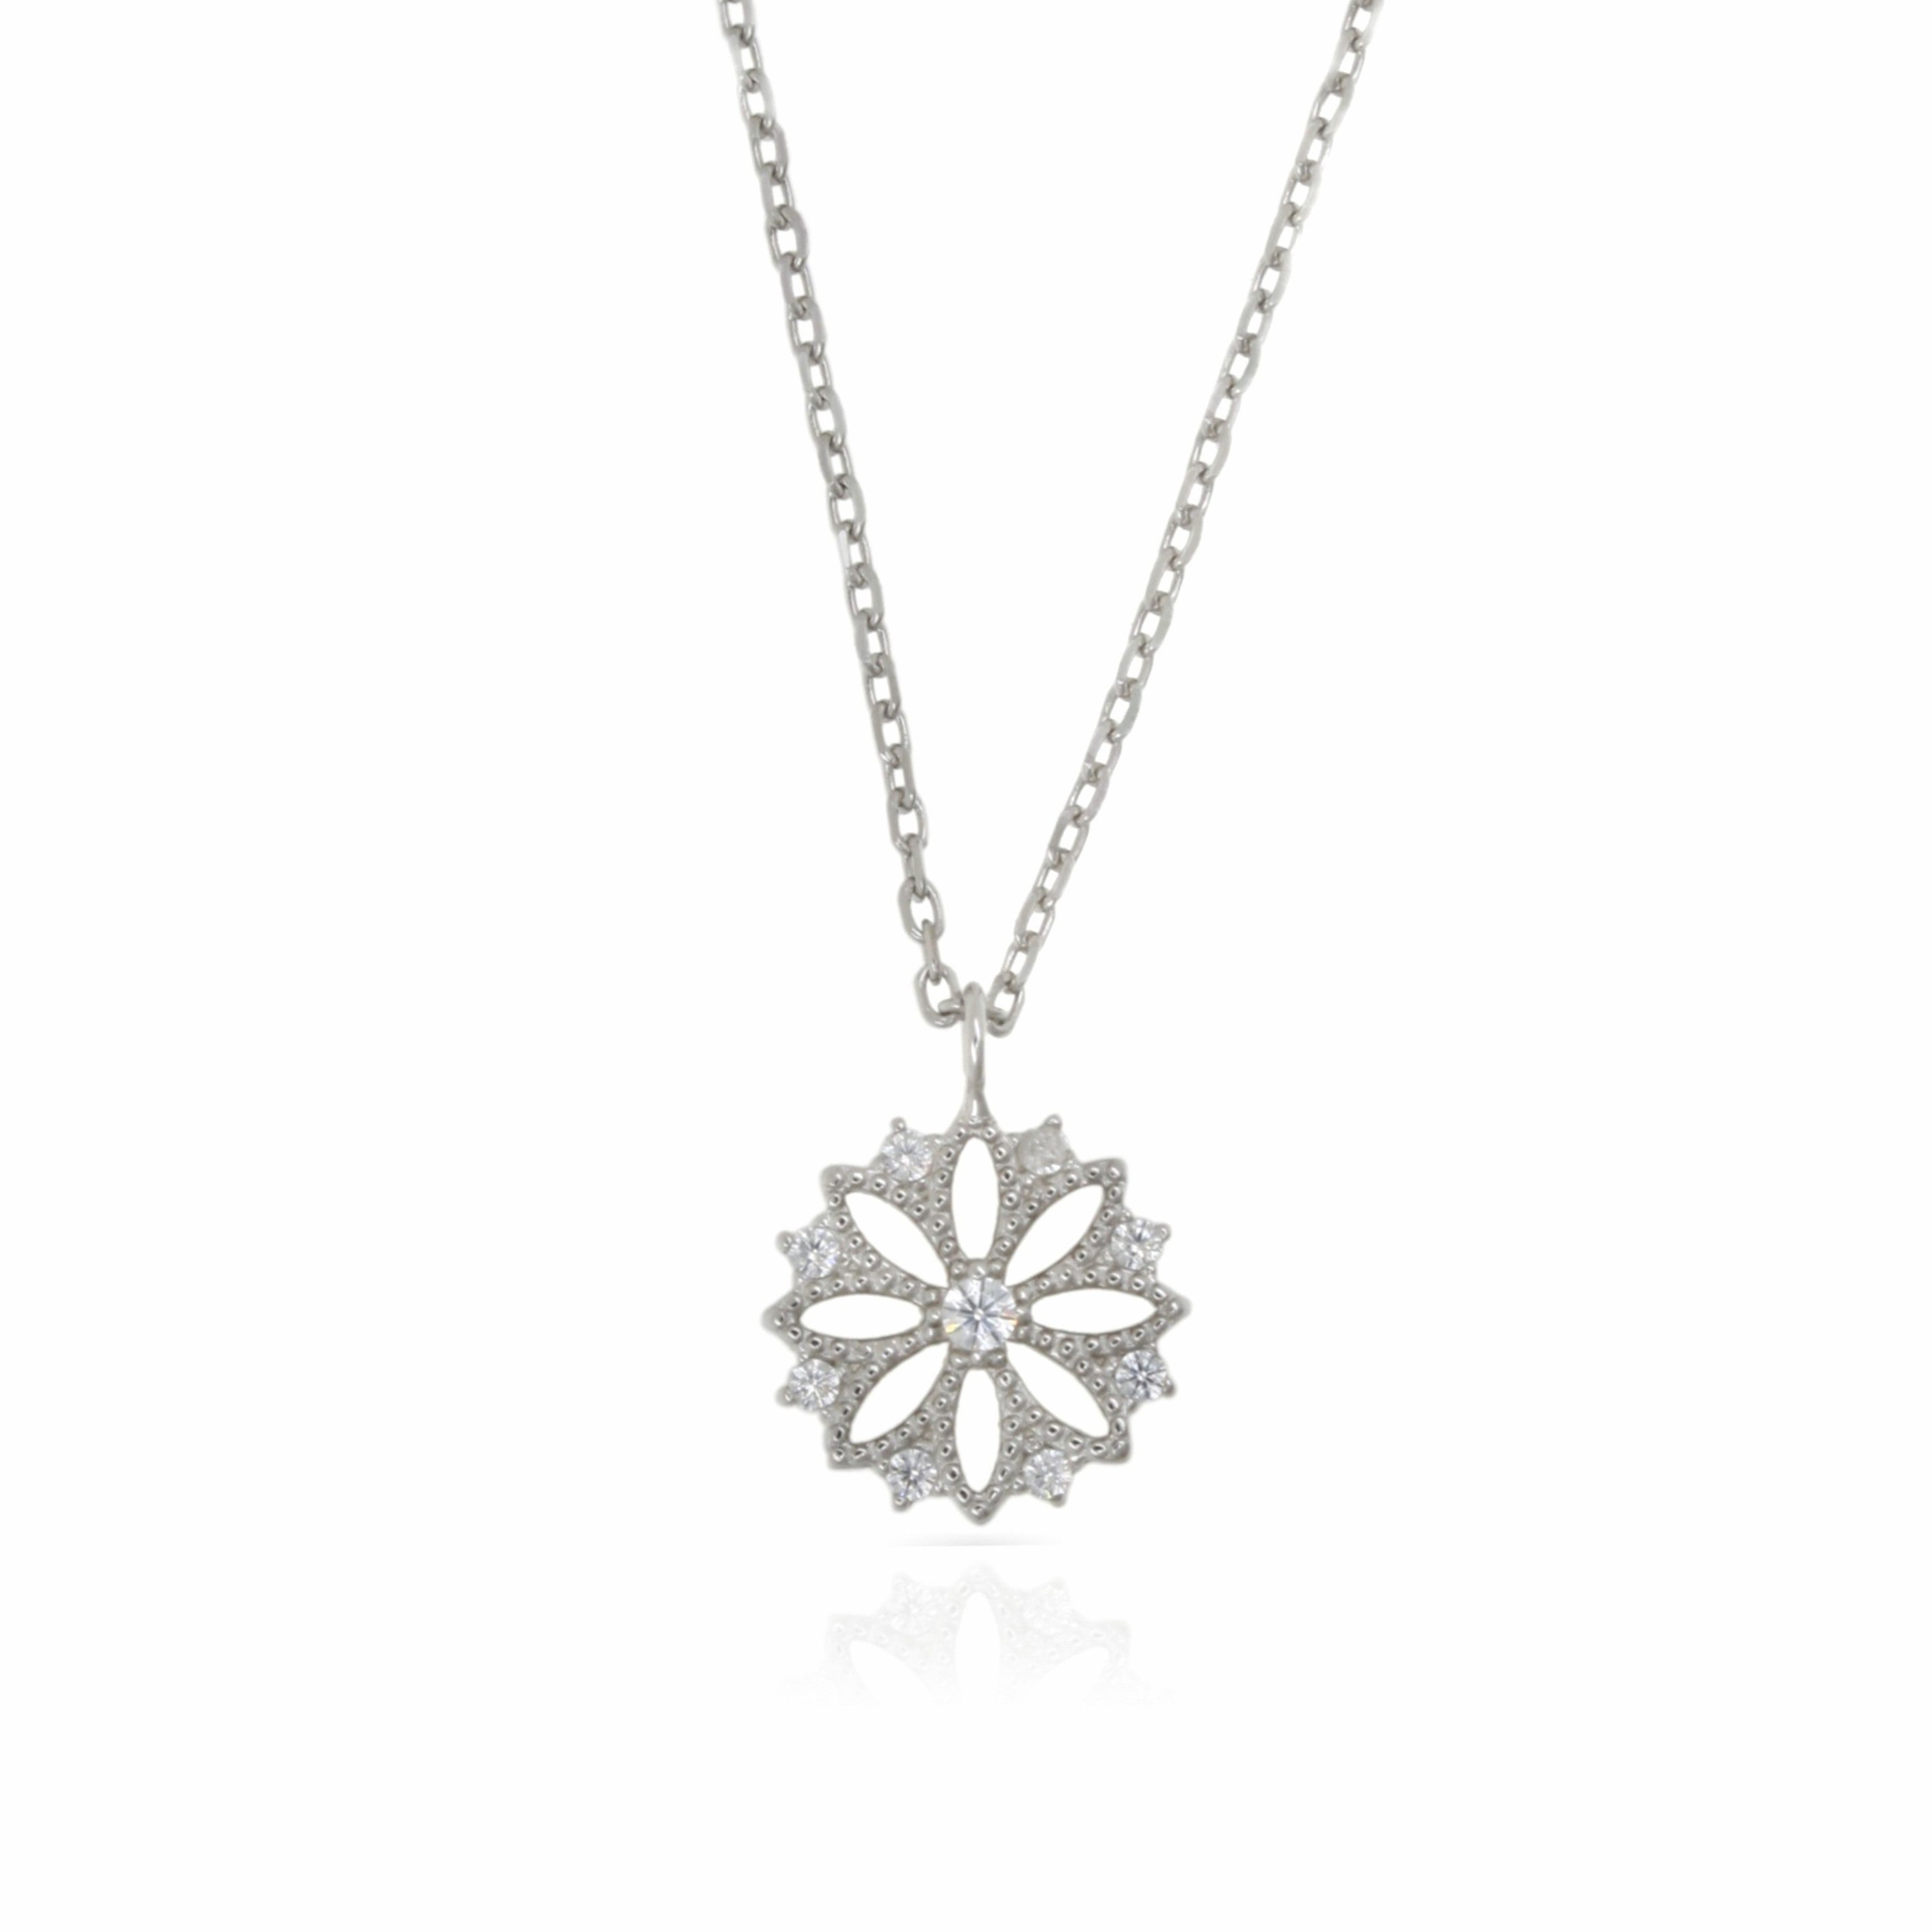 Sterling Silver Flower Pendant & Chain